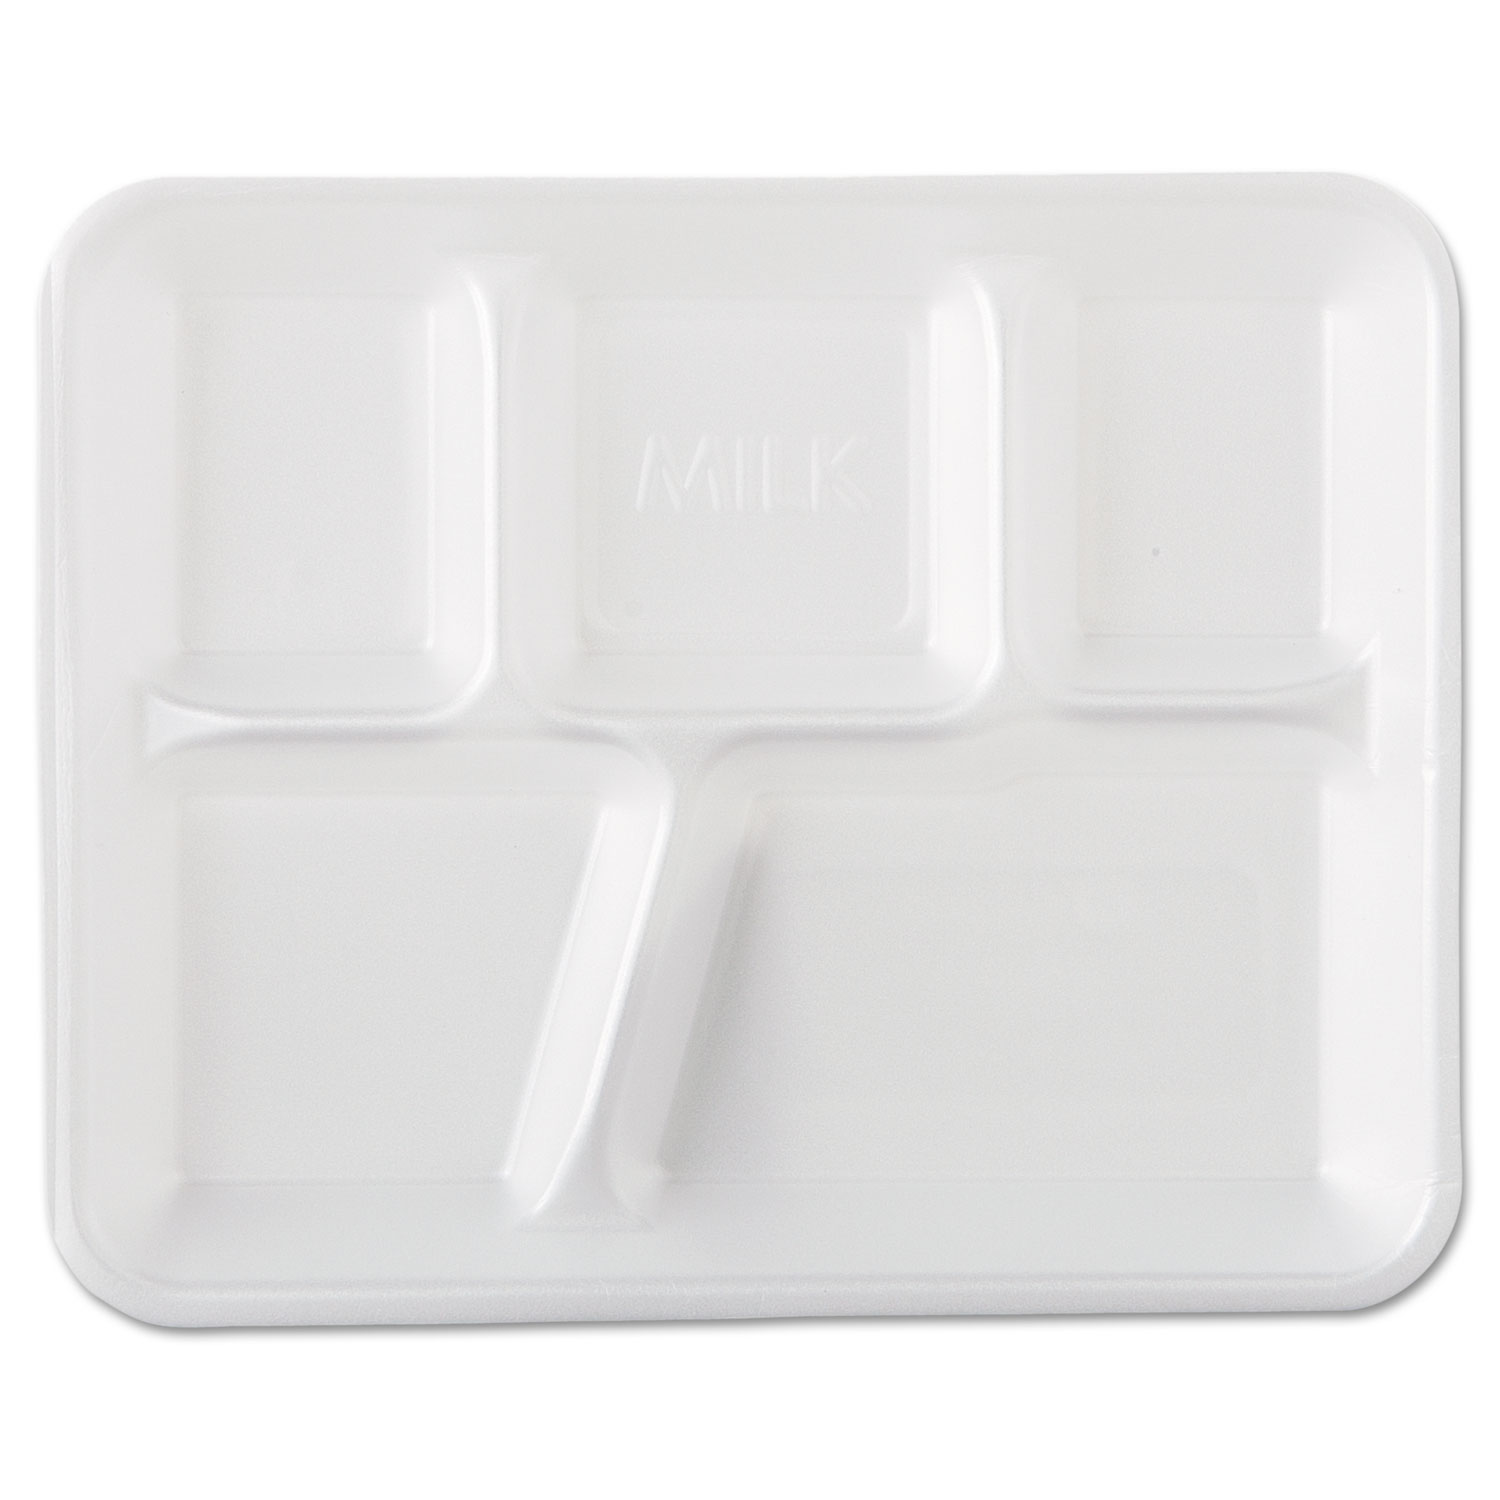 Deep 6 Compartment Foam School Tray - White